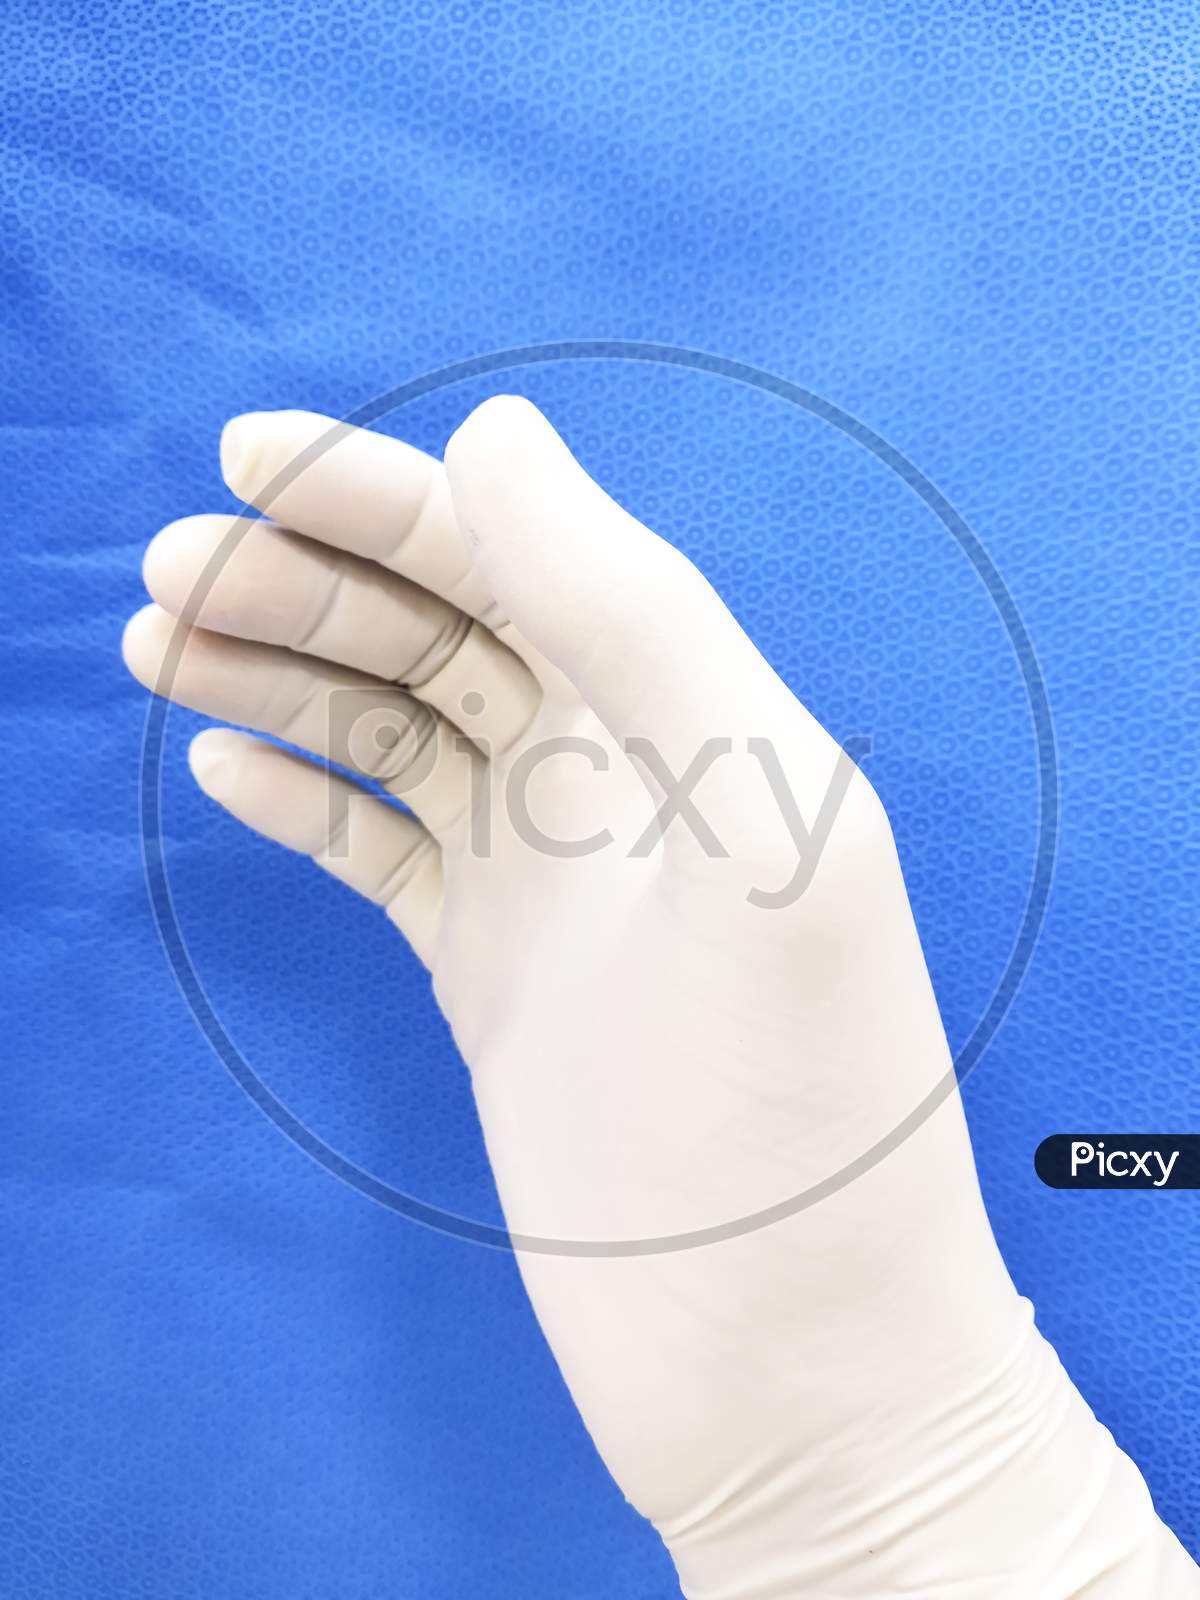 Sterile Glove In Hand